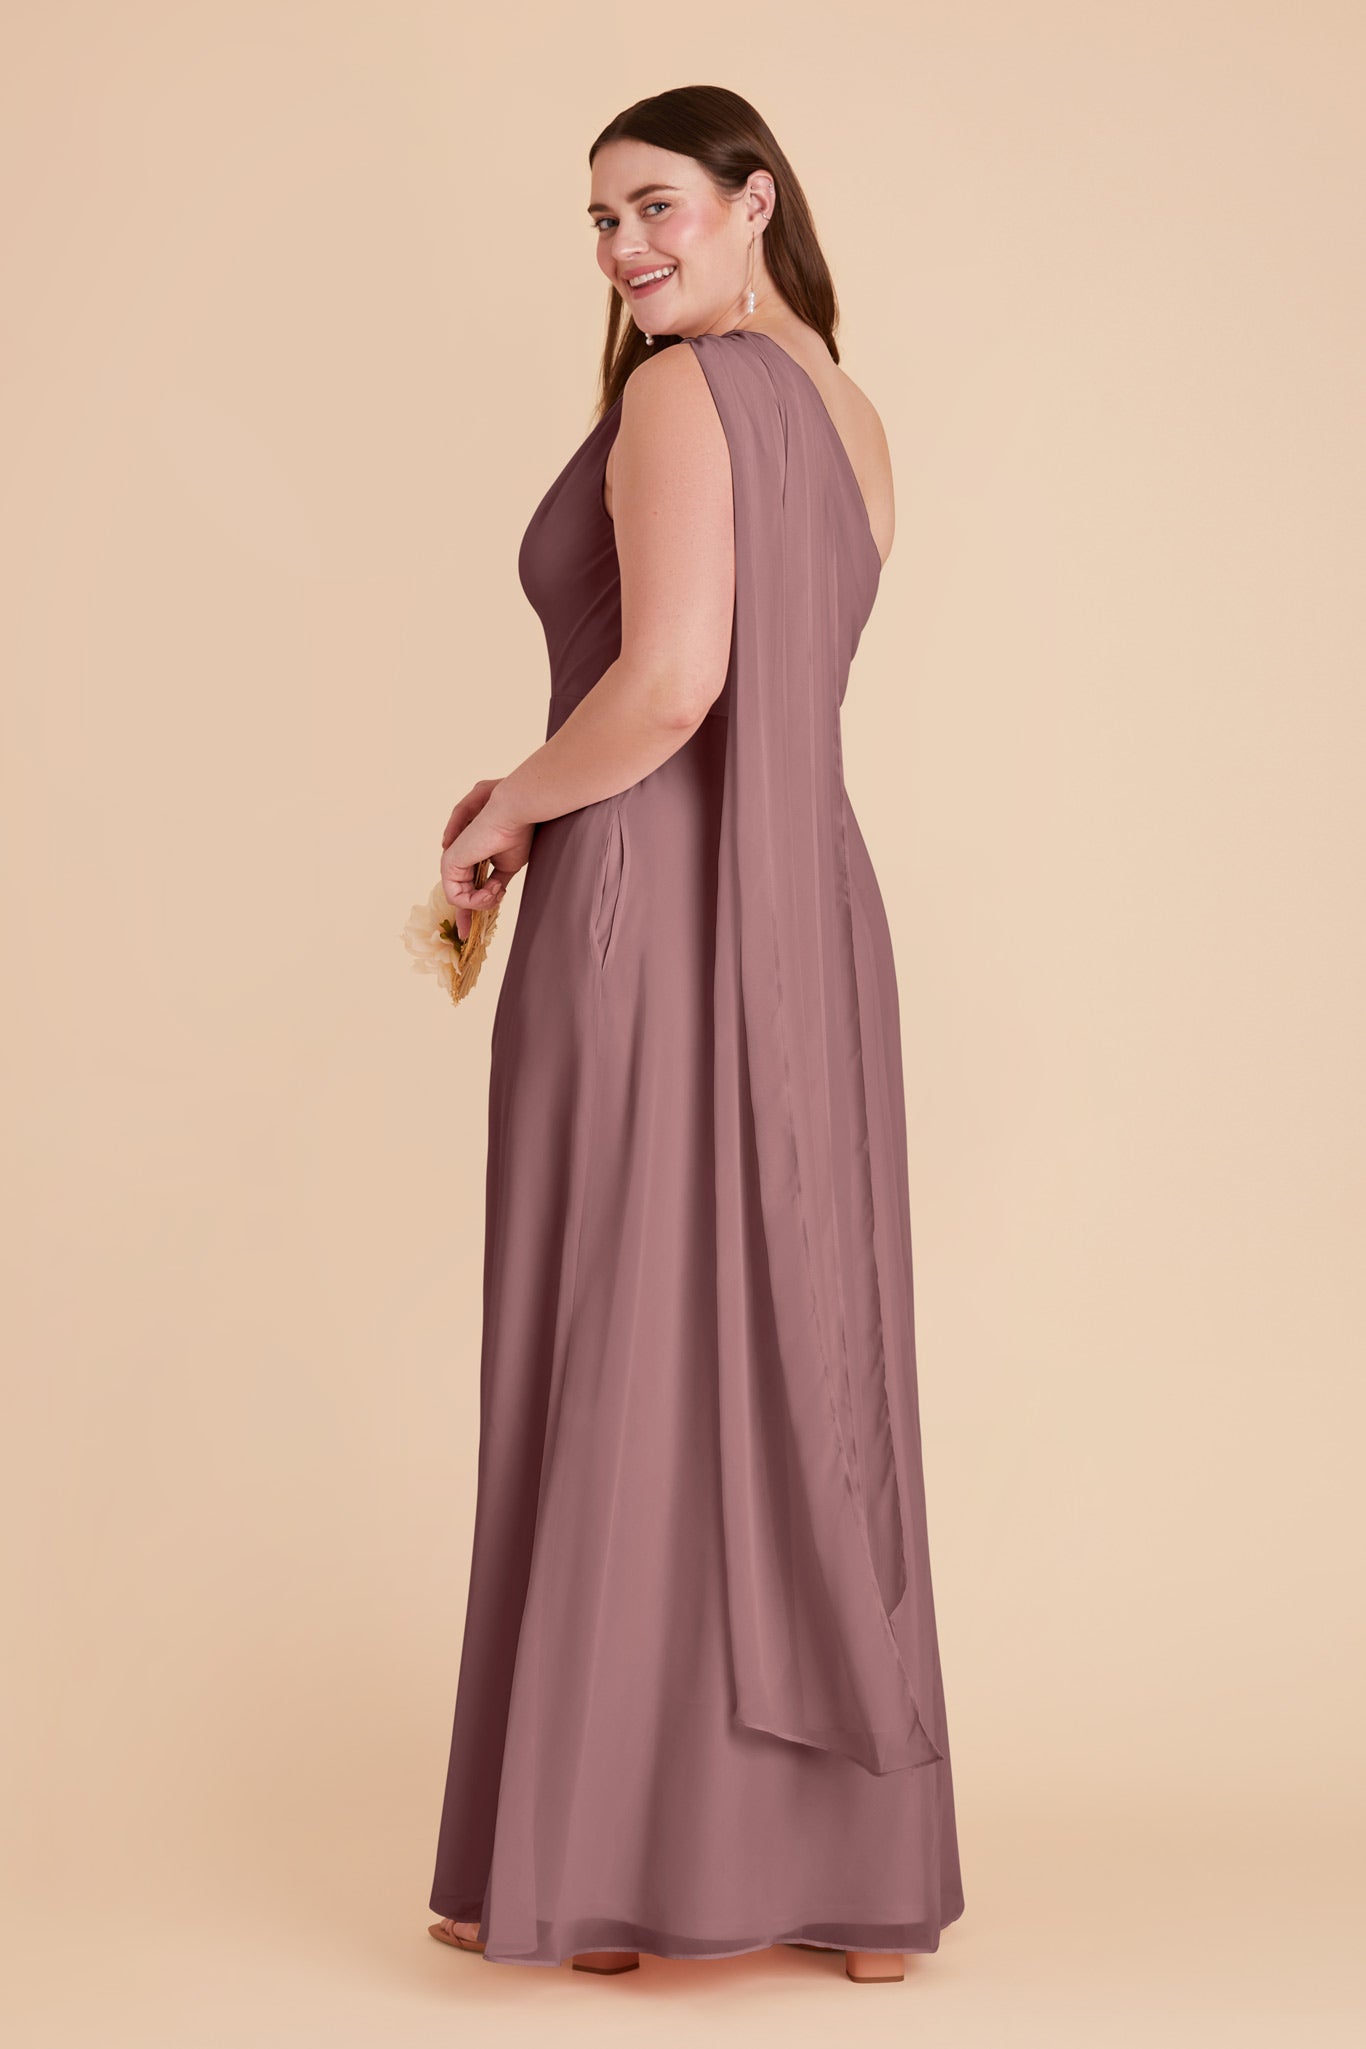 Dark Mauve Melissa Chiffon Dress by Birdy Grey